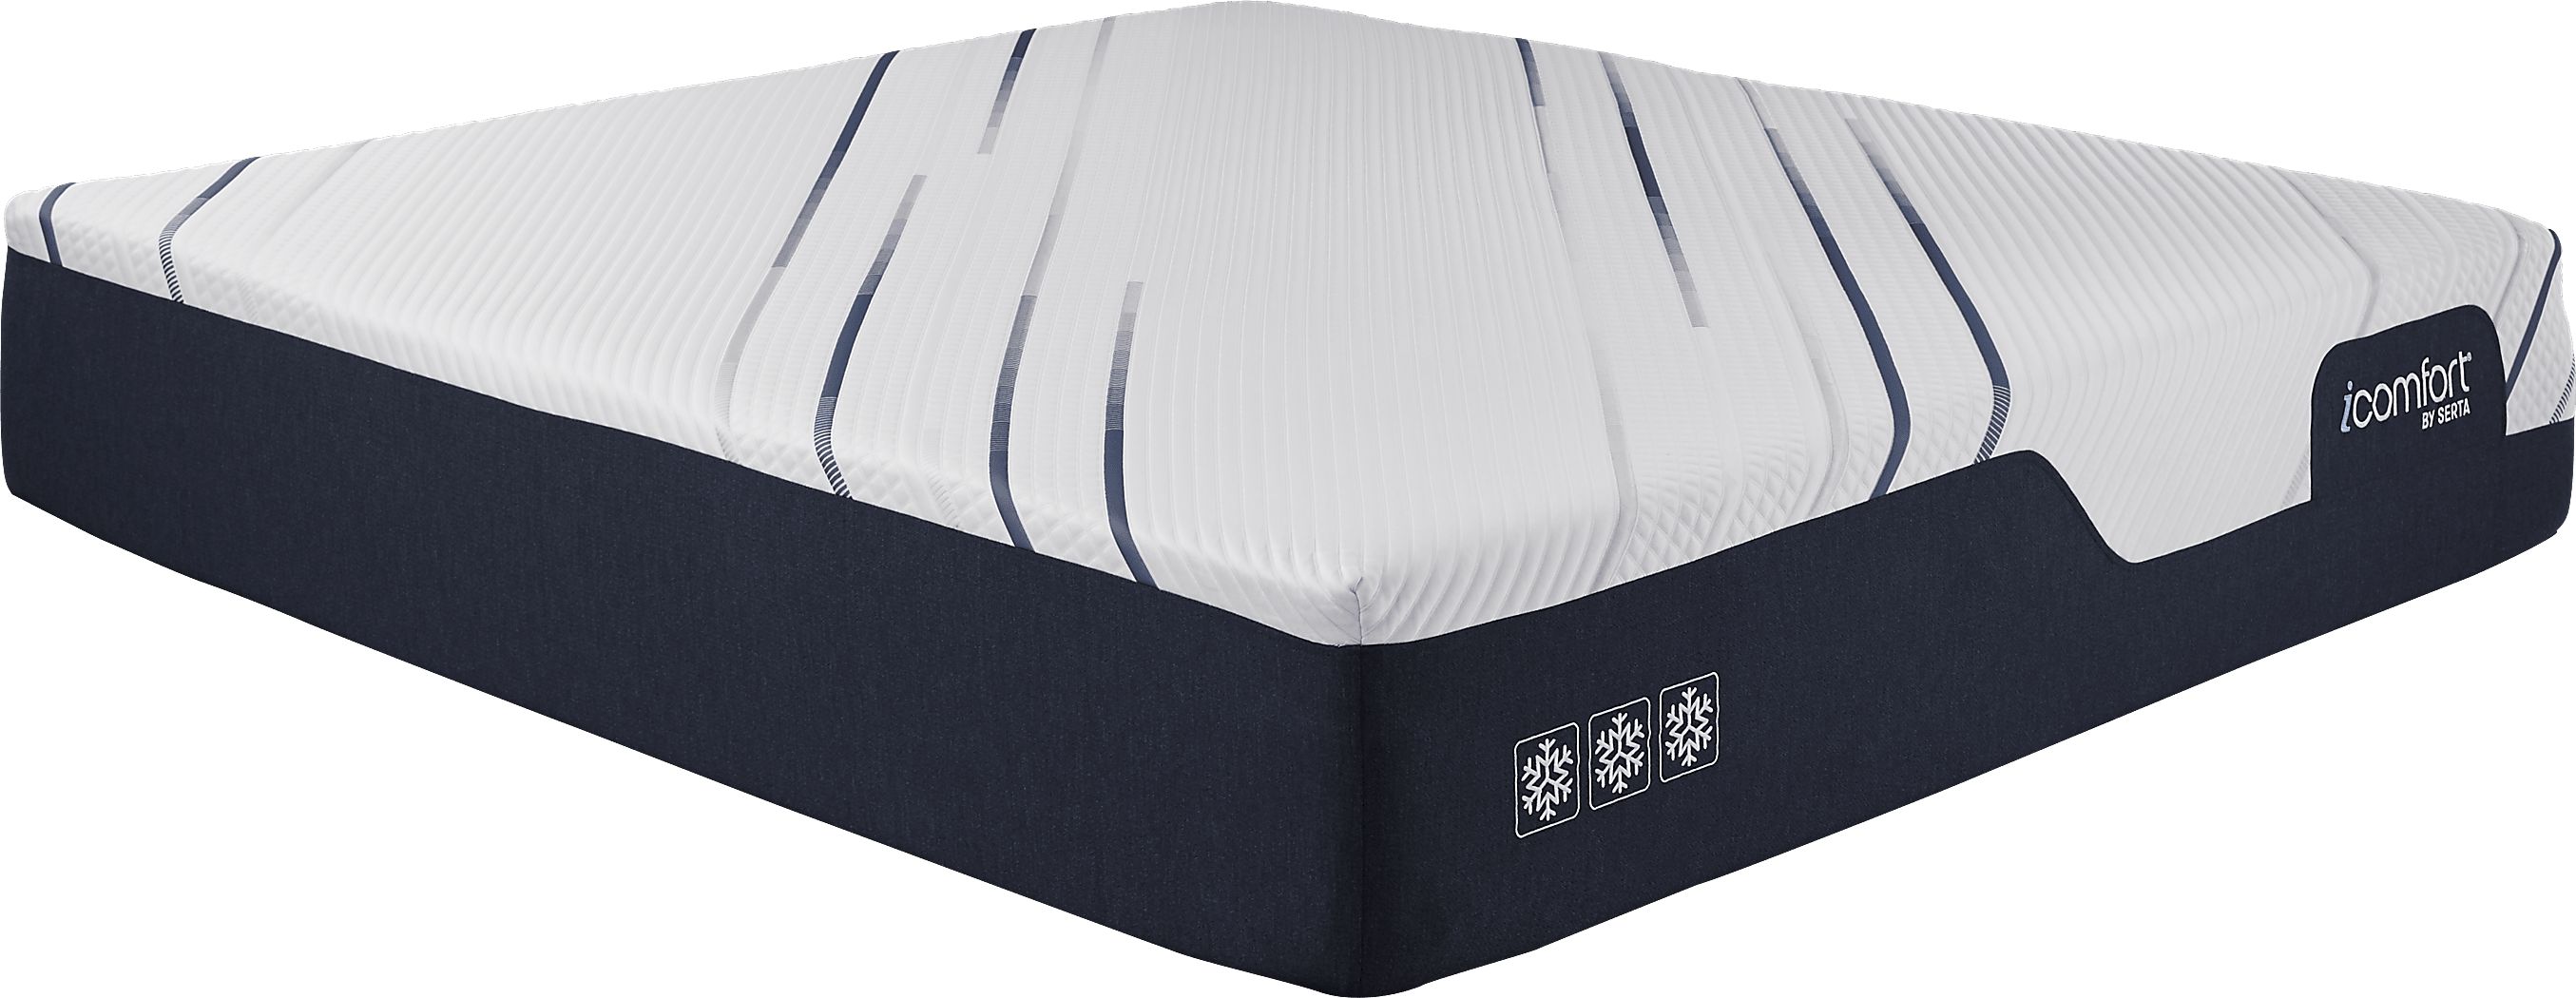 customer reviews on the serta icomfort king mattress